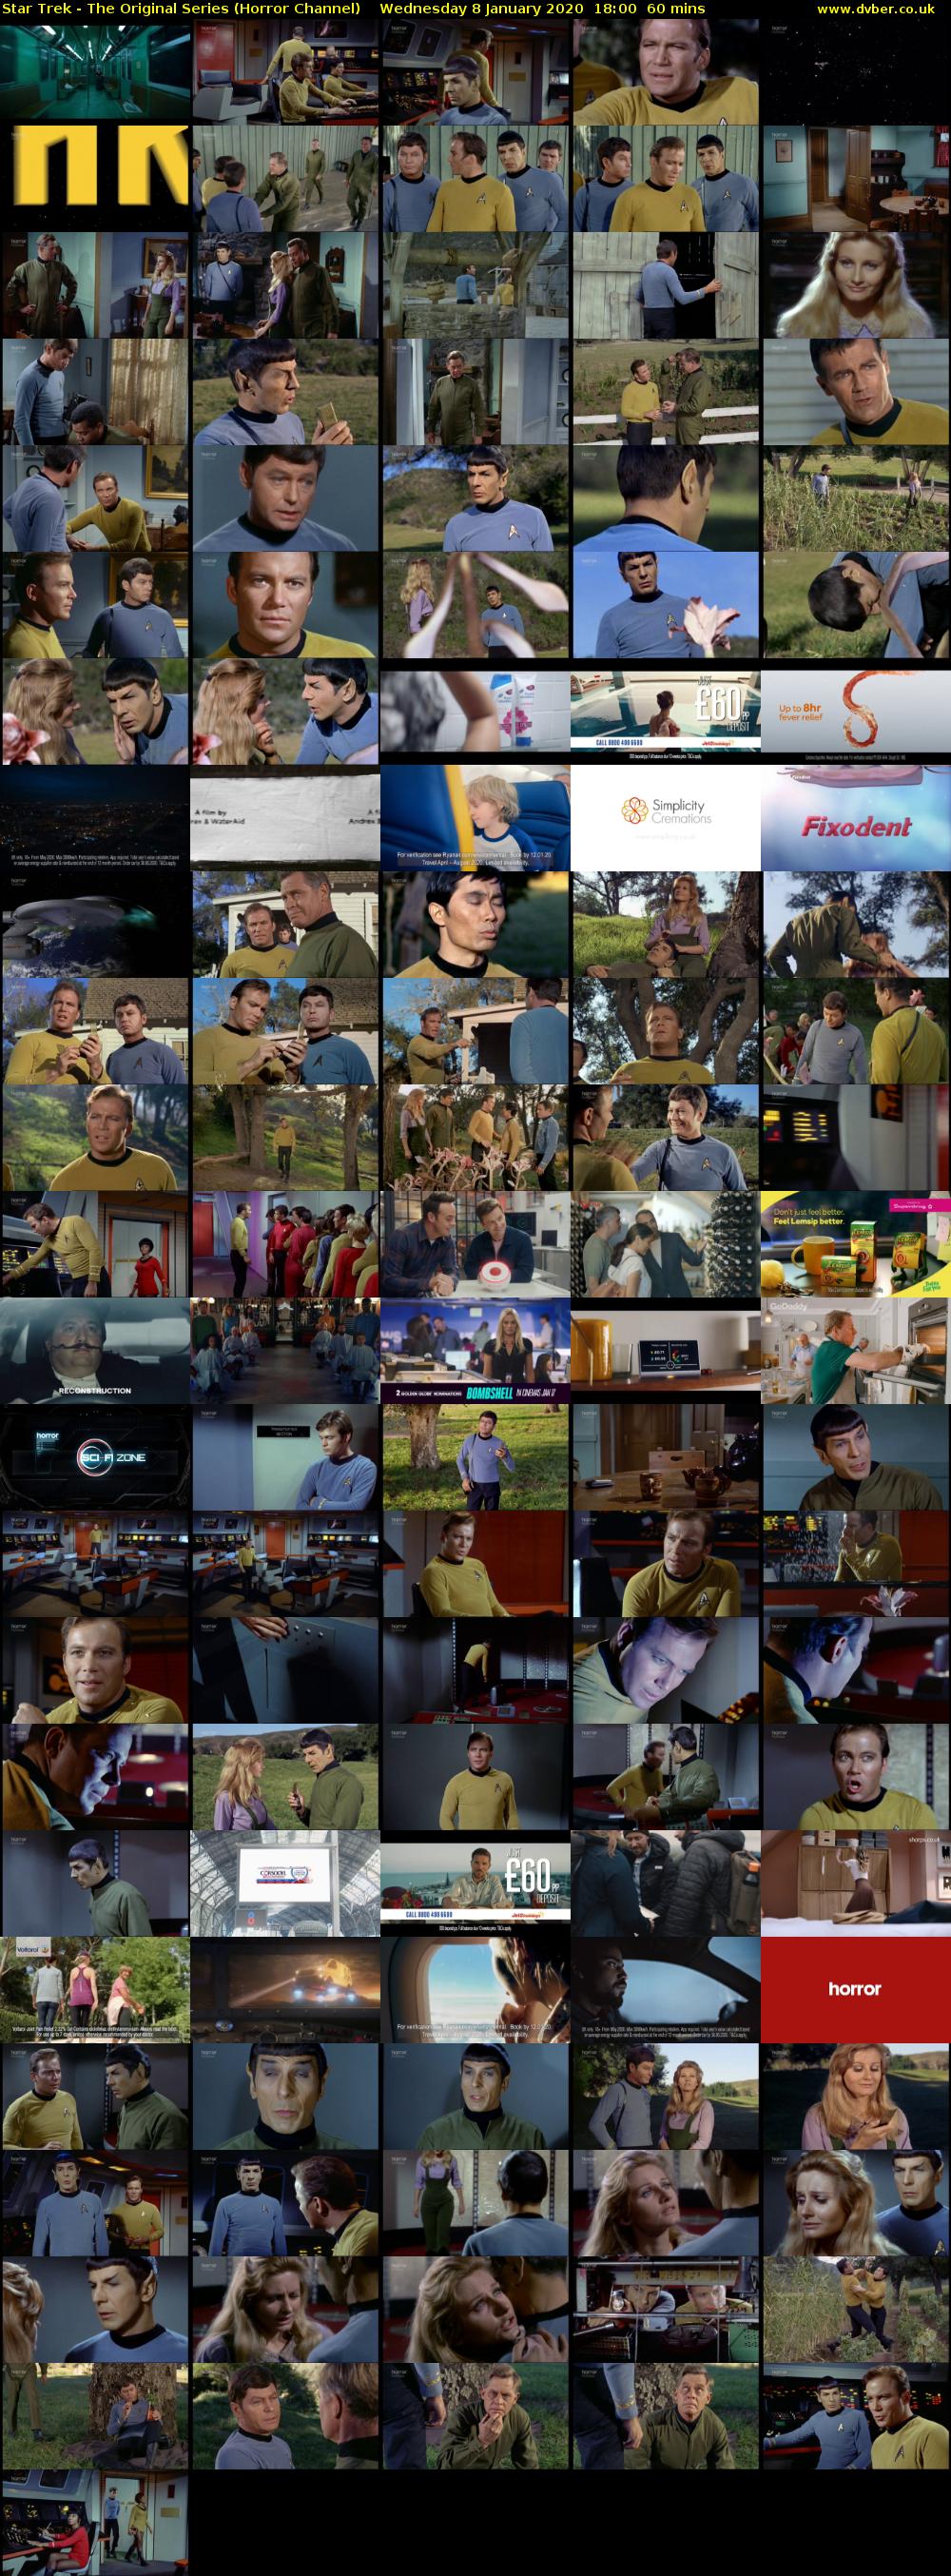 Star Trek - The Original Series (Horror Channel) Wednesday 8 January 2020 18:00 - 19:00